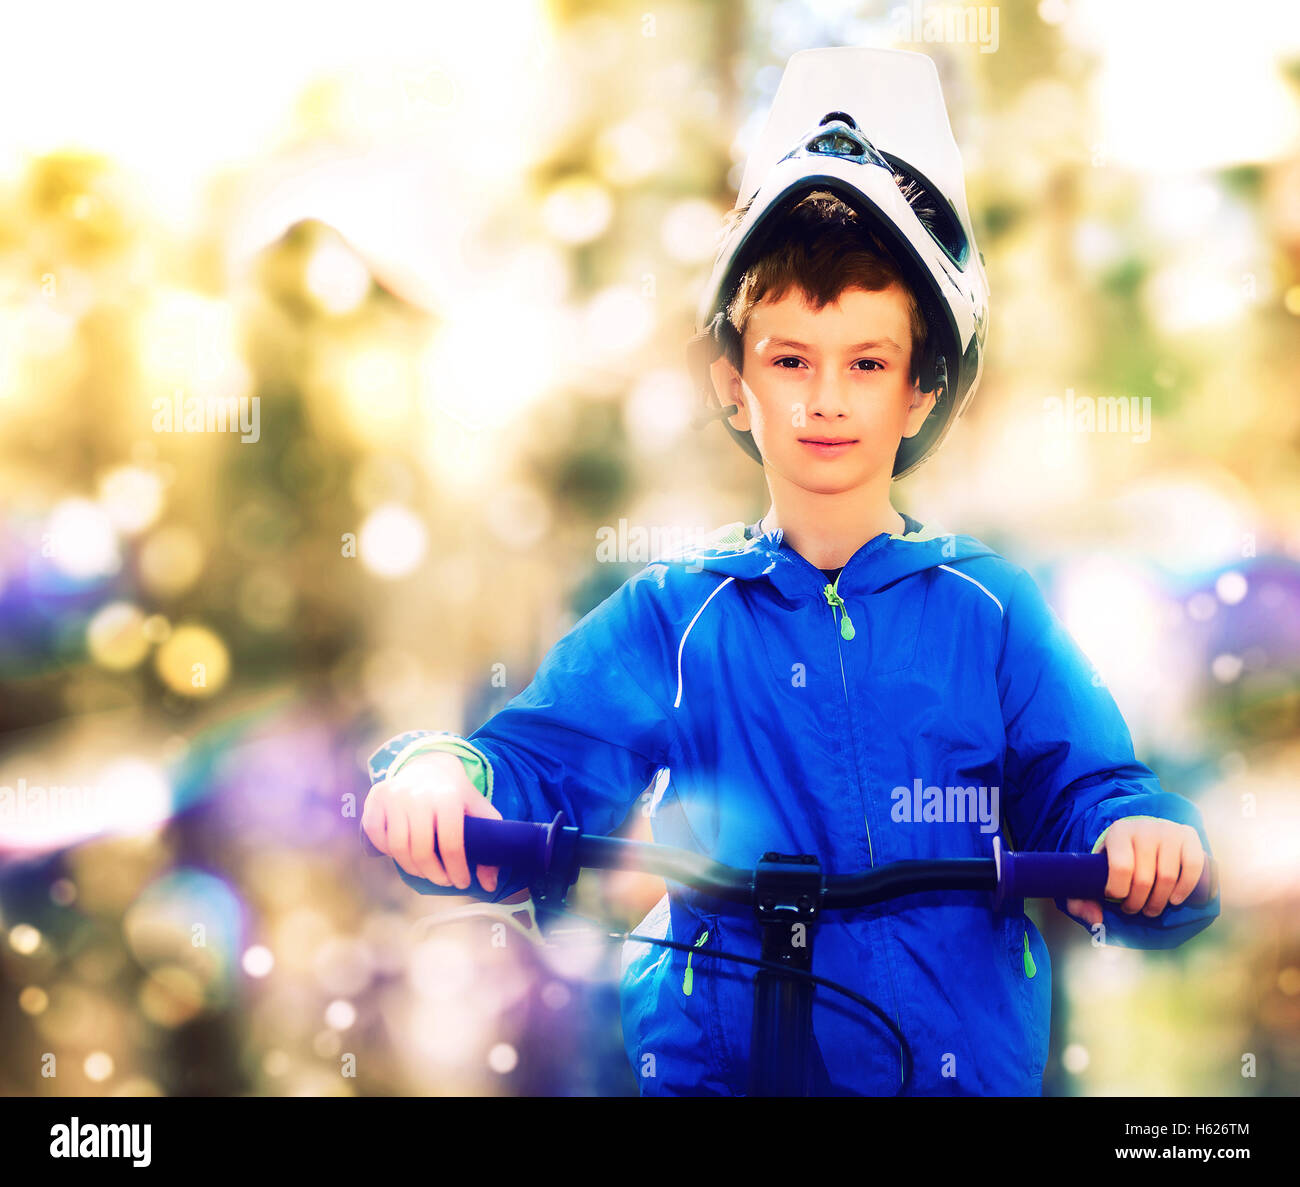 Portrait of boy on a bike Stock Photo